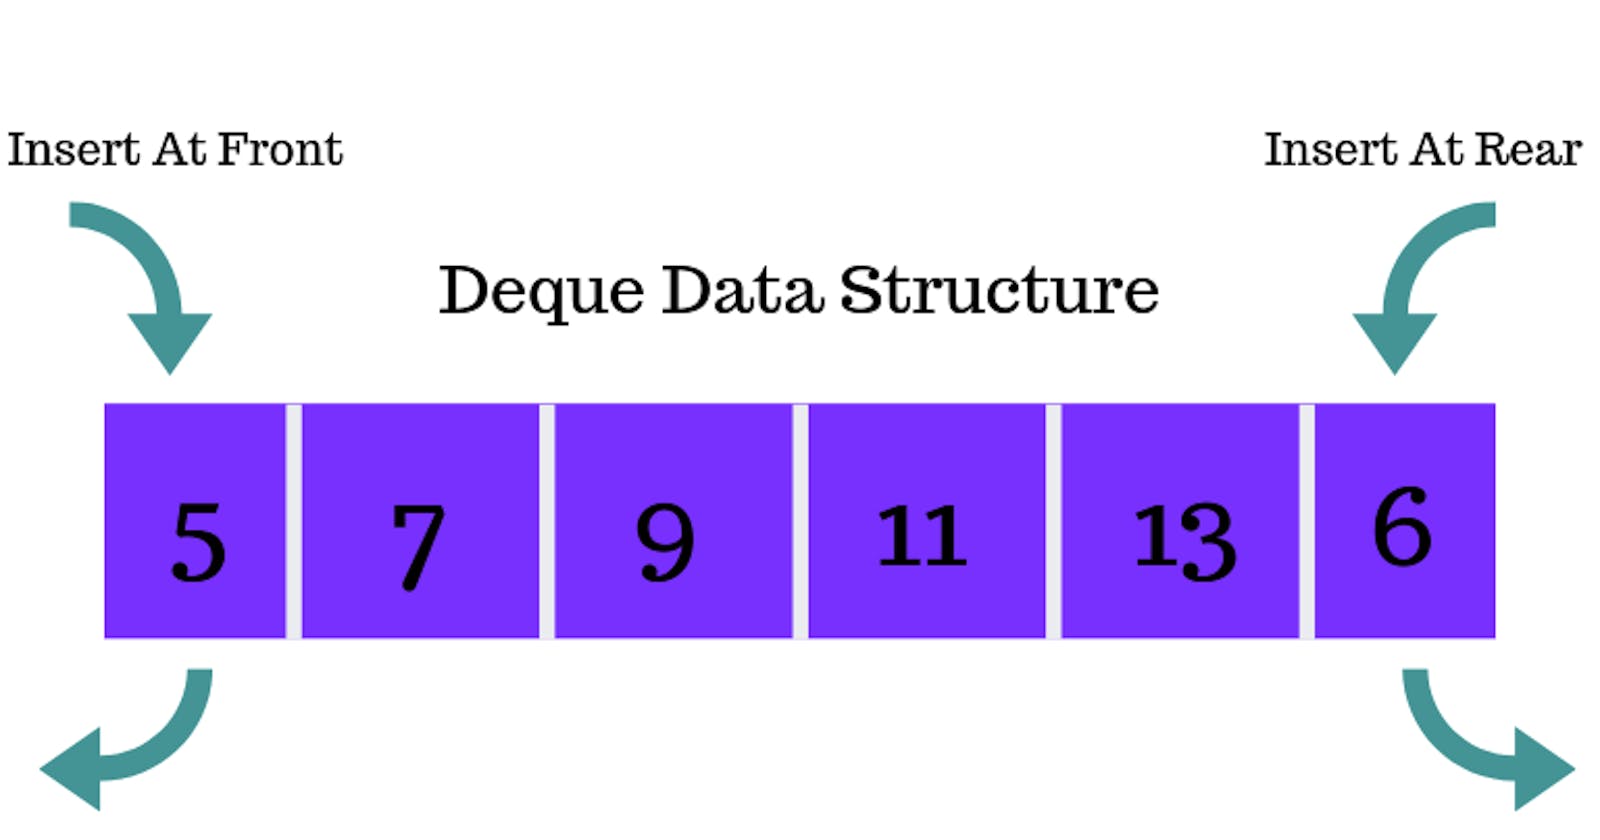 Dequeue data structure simplified